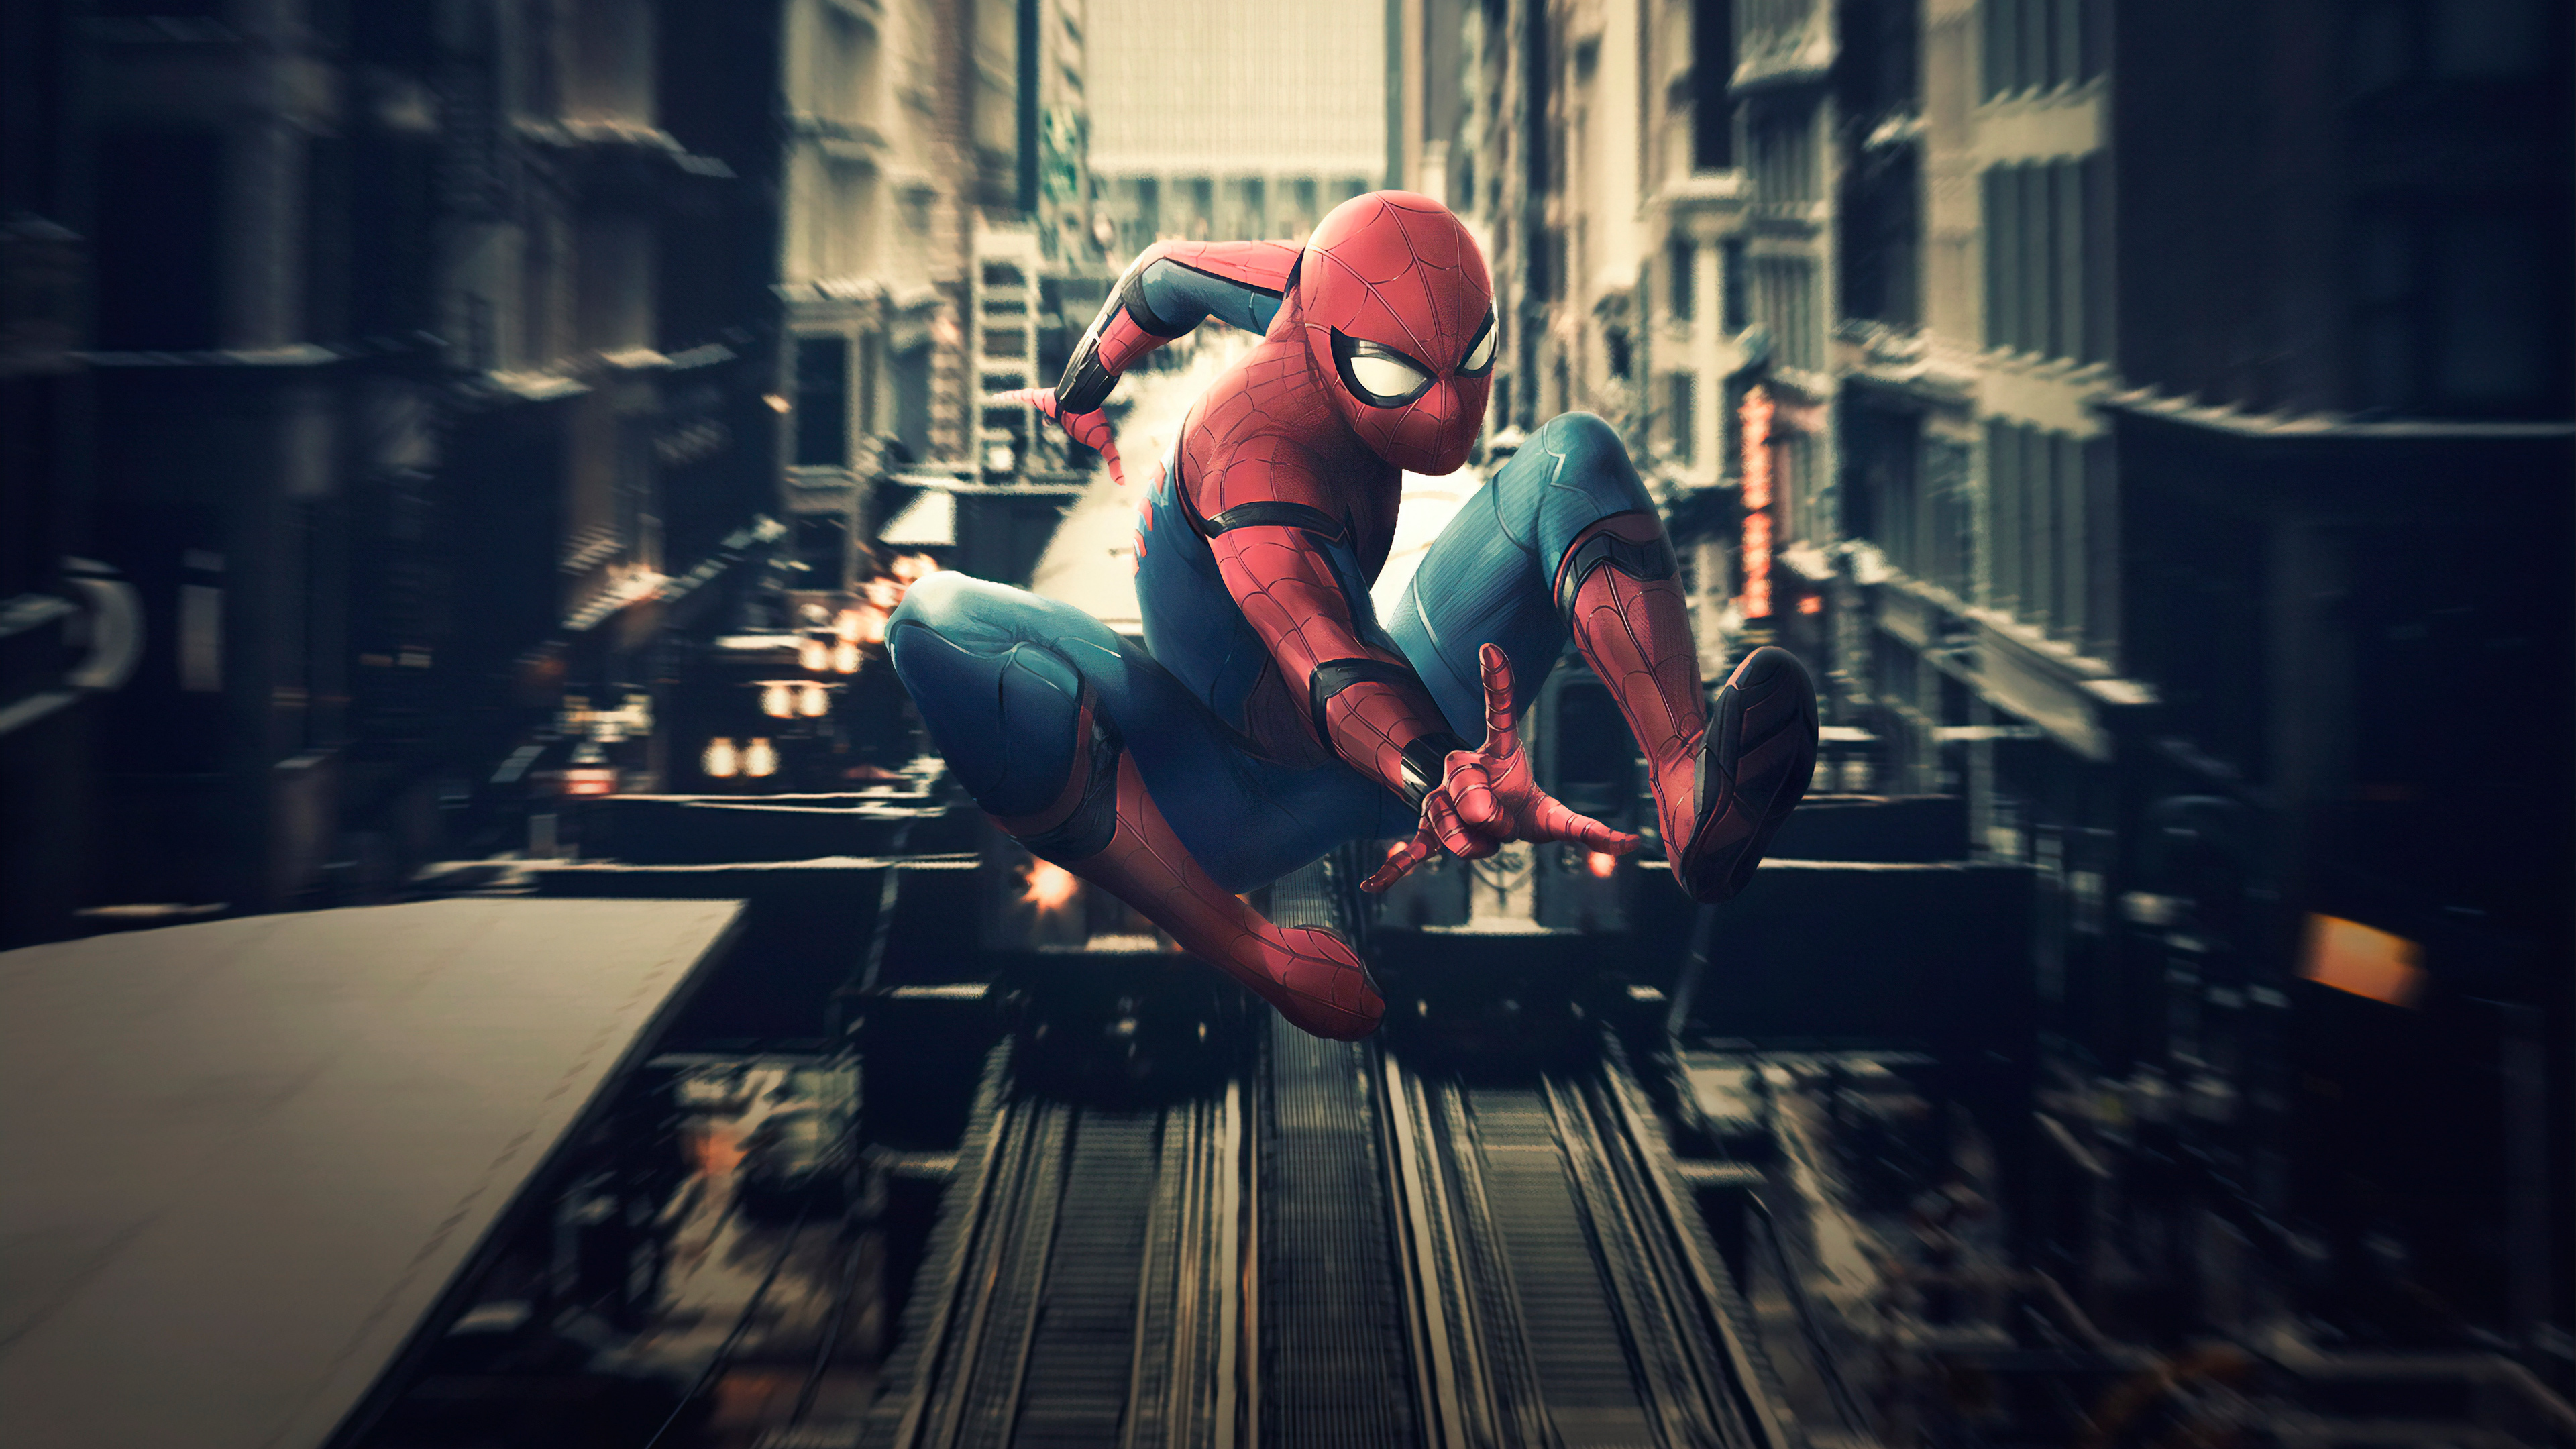 Wallpaper 4k Spiderman In Action Wallpaper